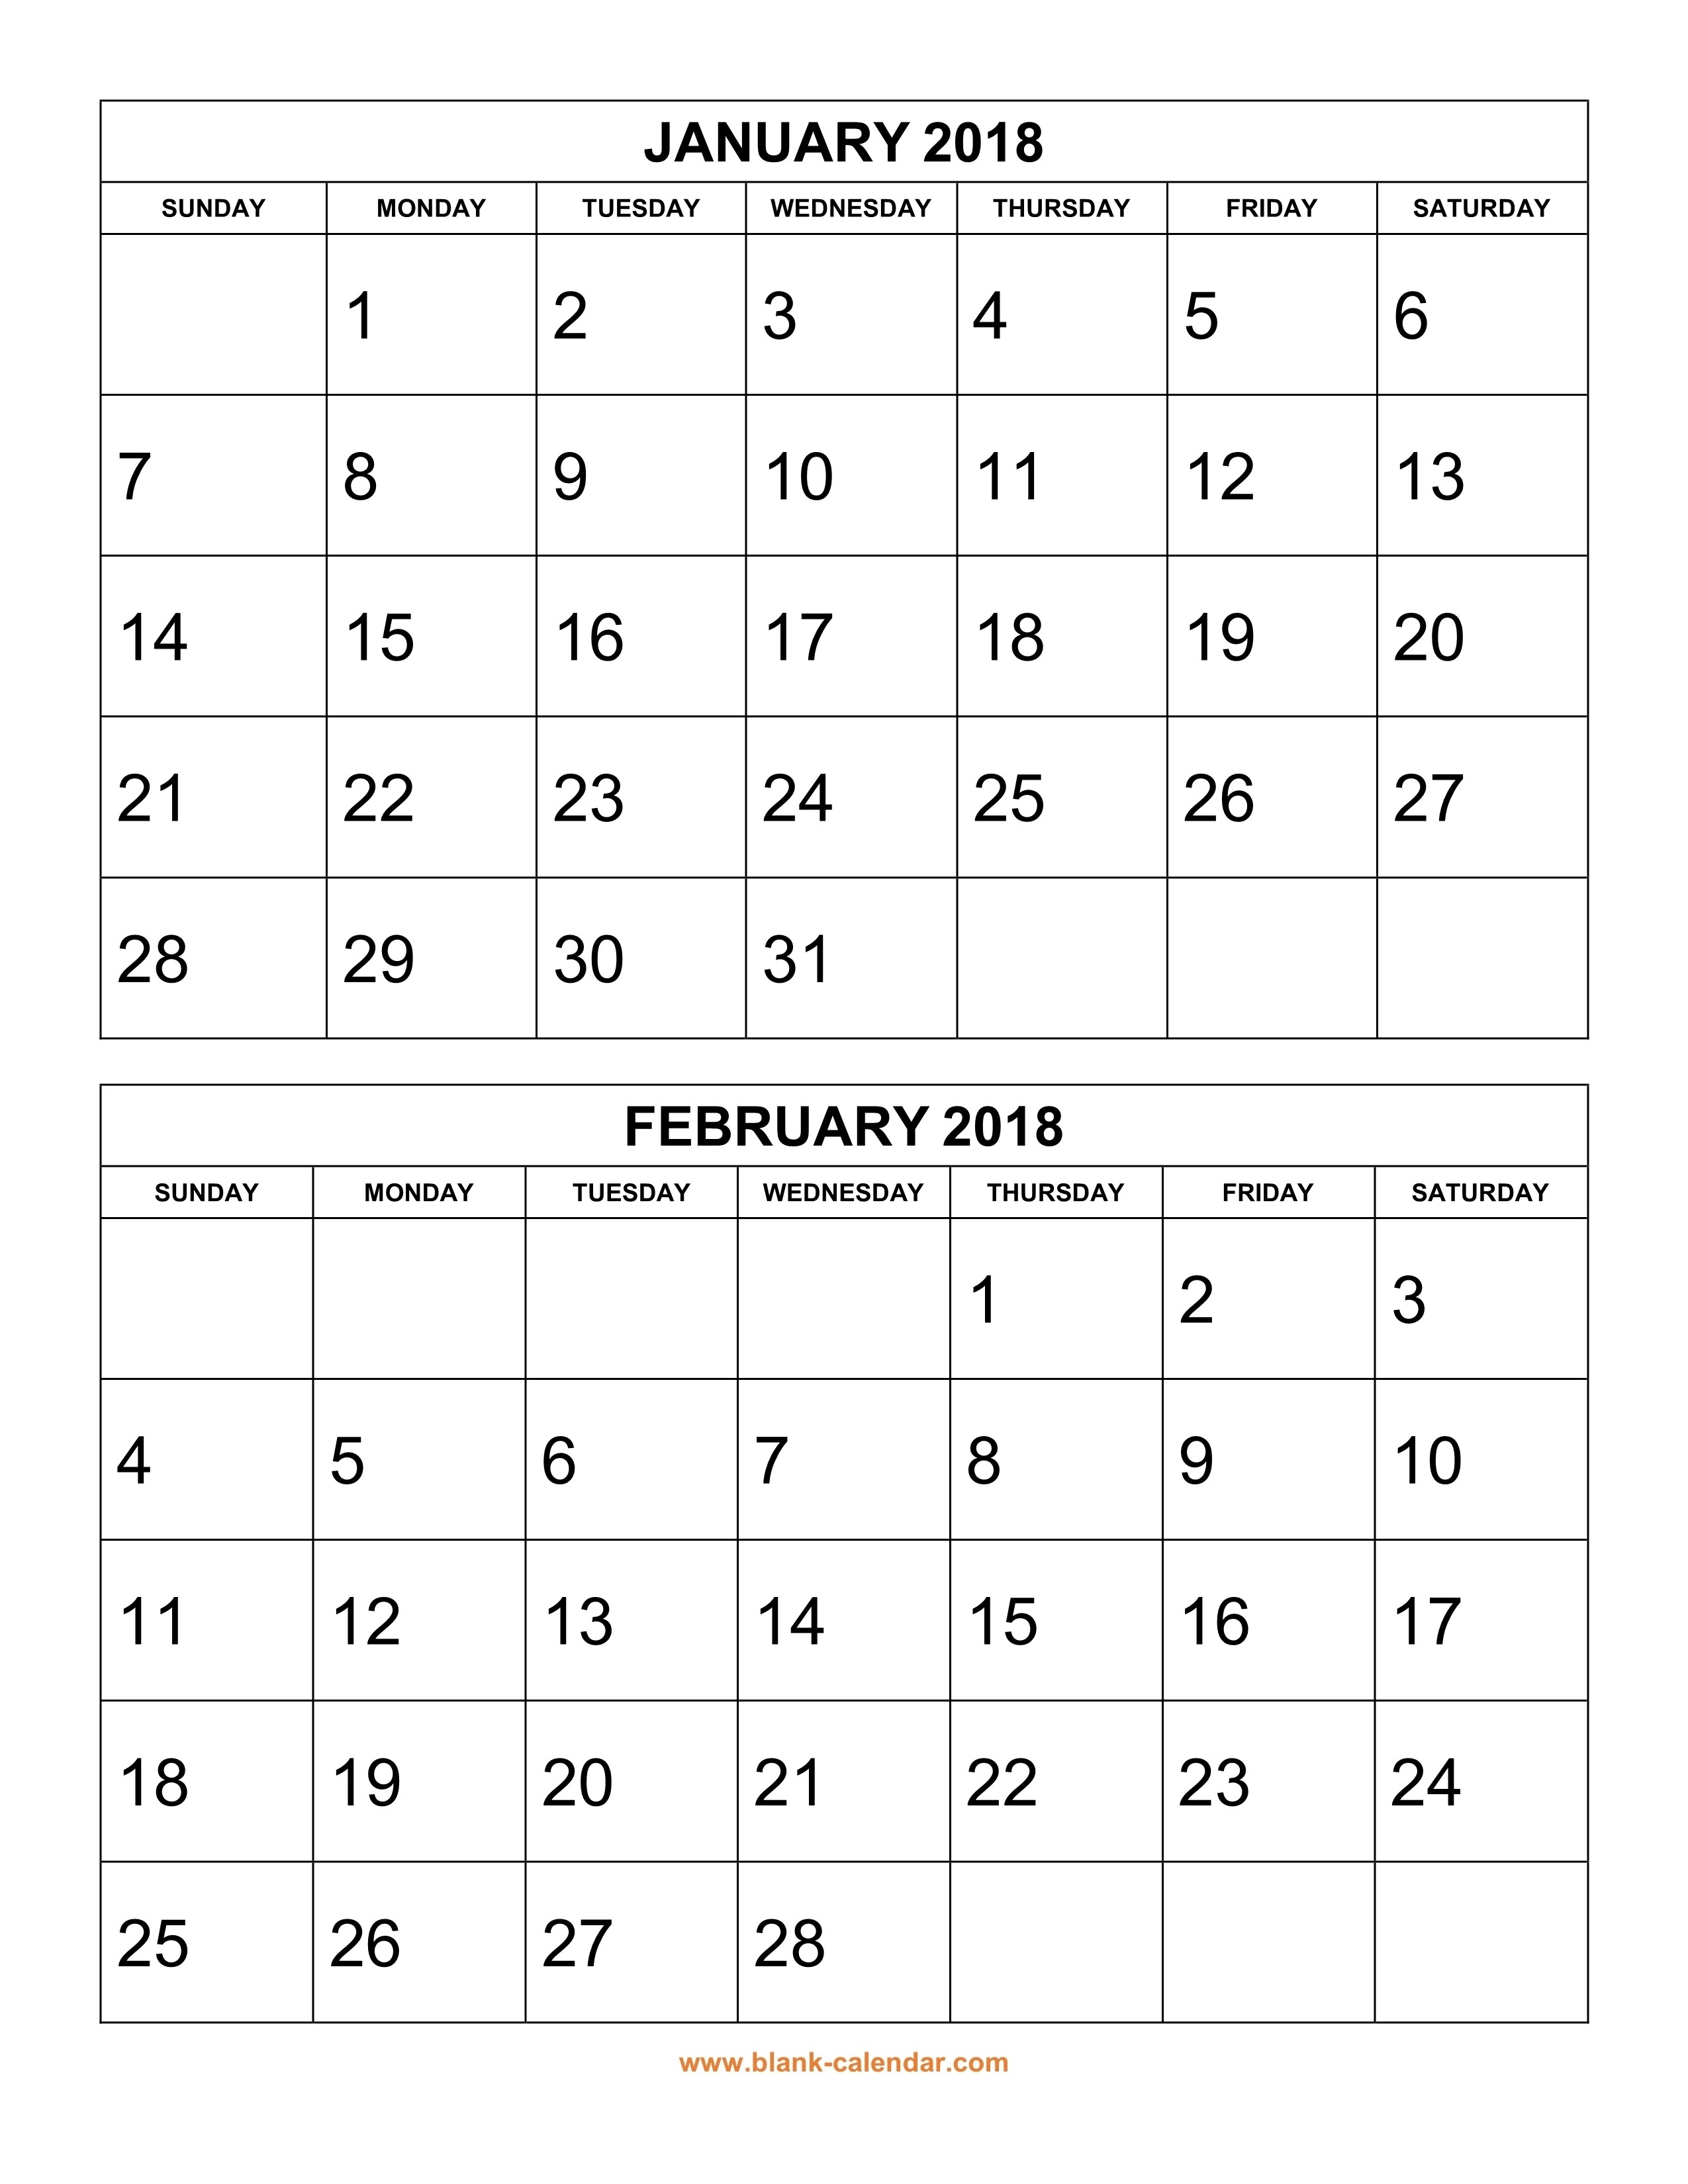 Monthly Calendar 2 Page To Print | Calendar Printing Example-Free Printable 2 Page Monthly Calendar